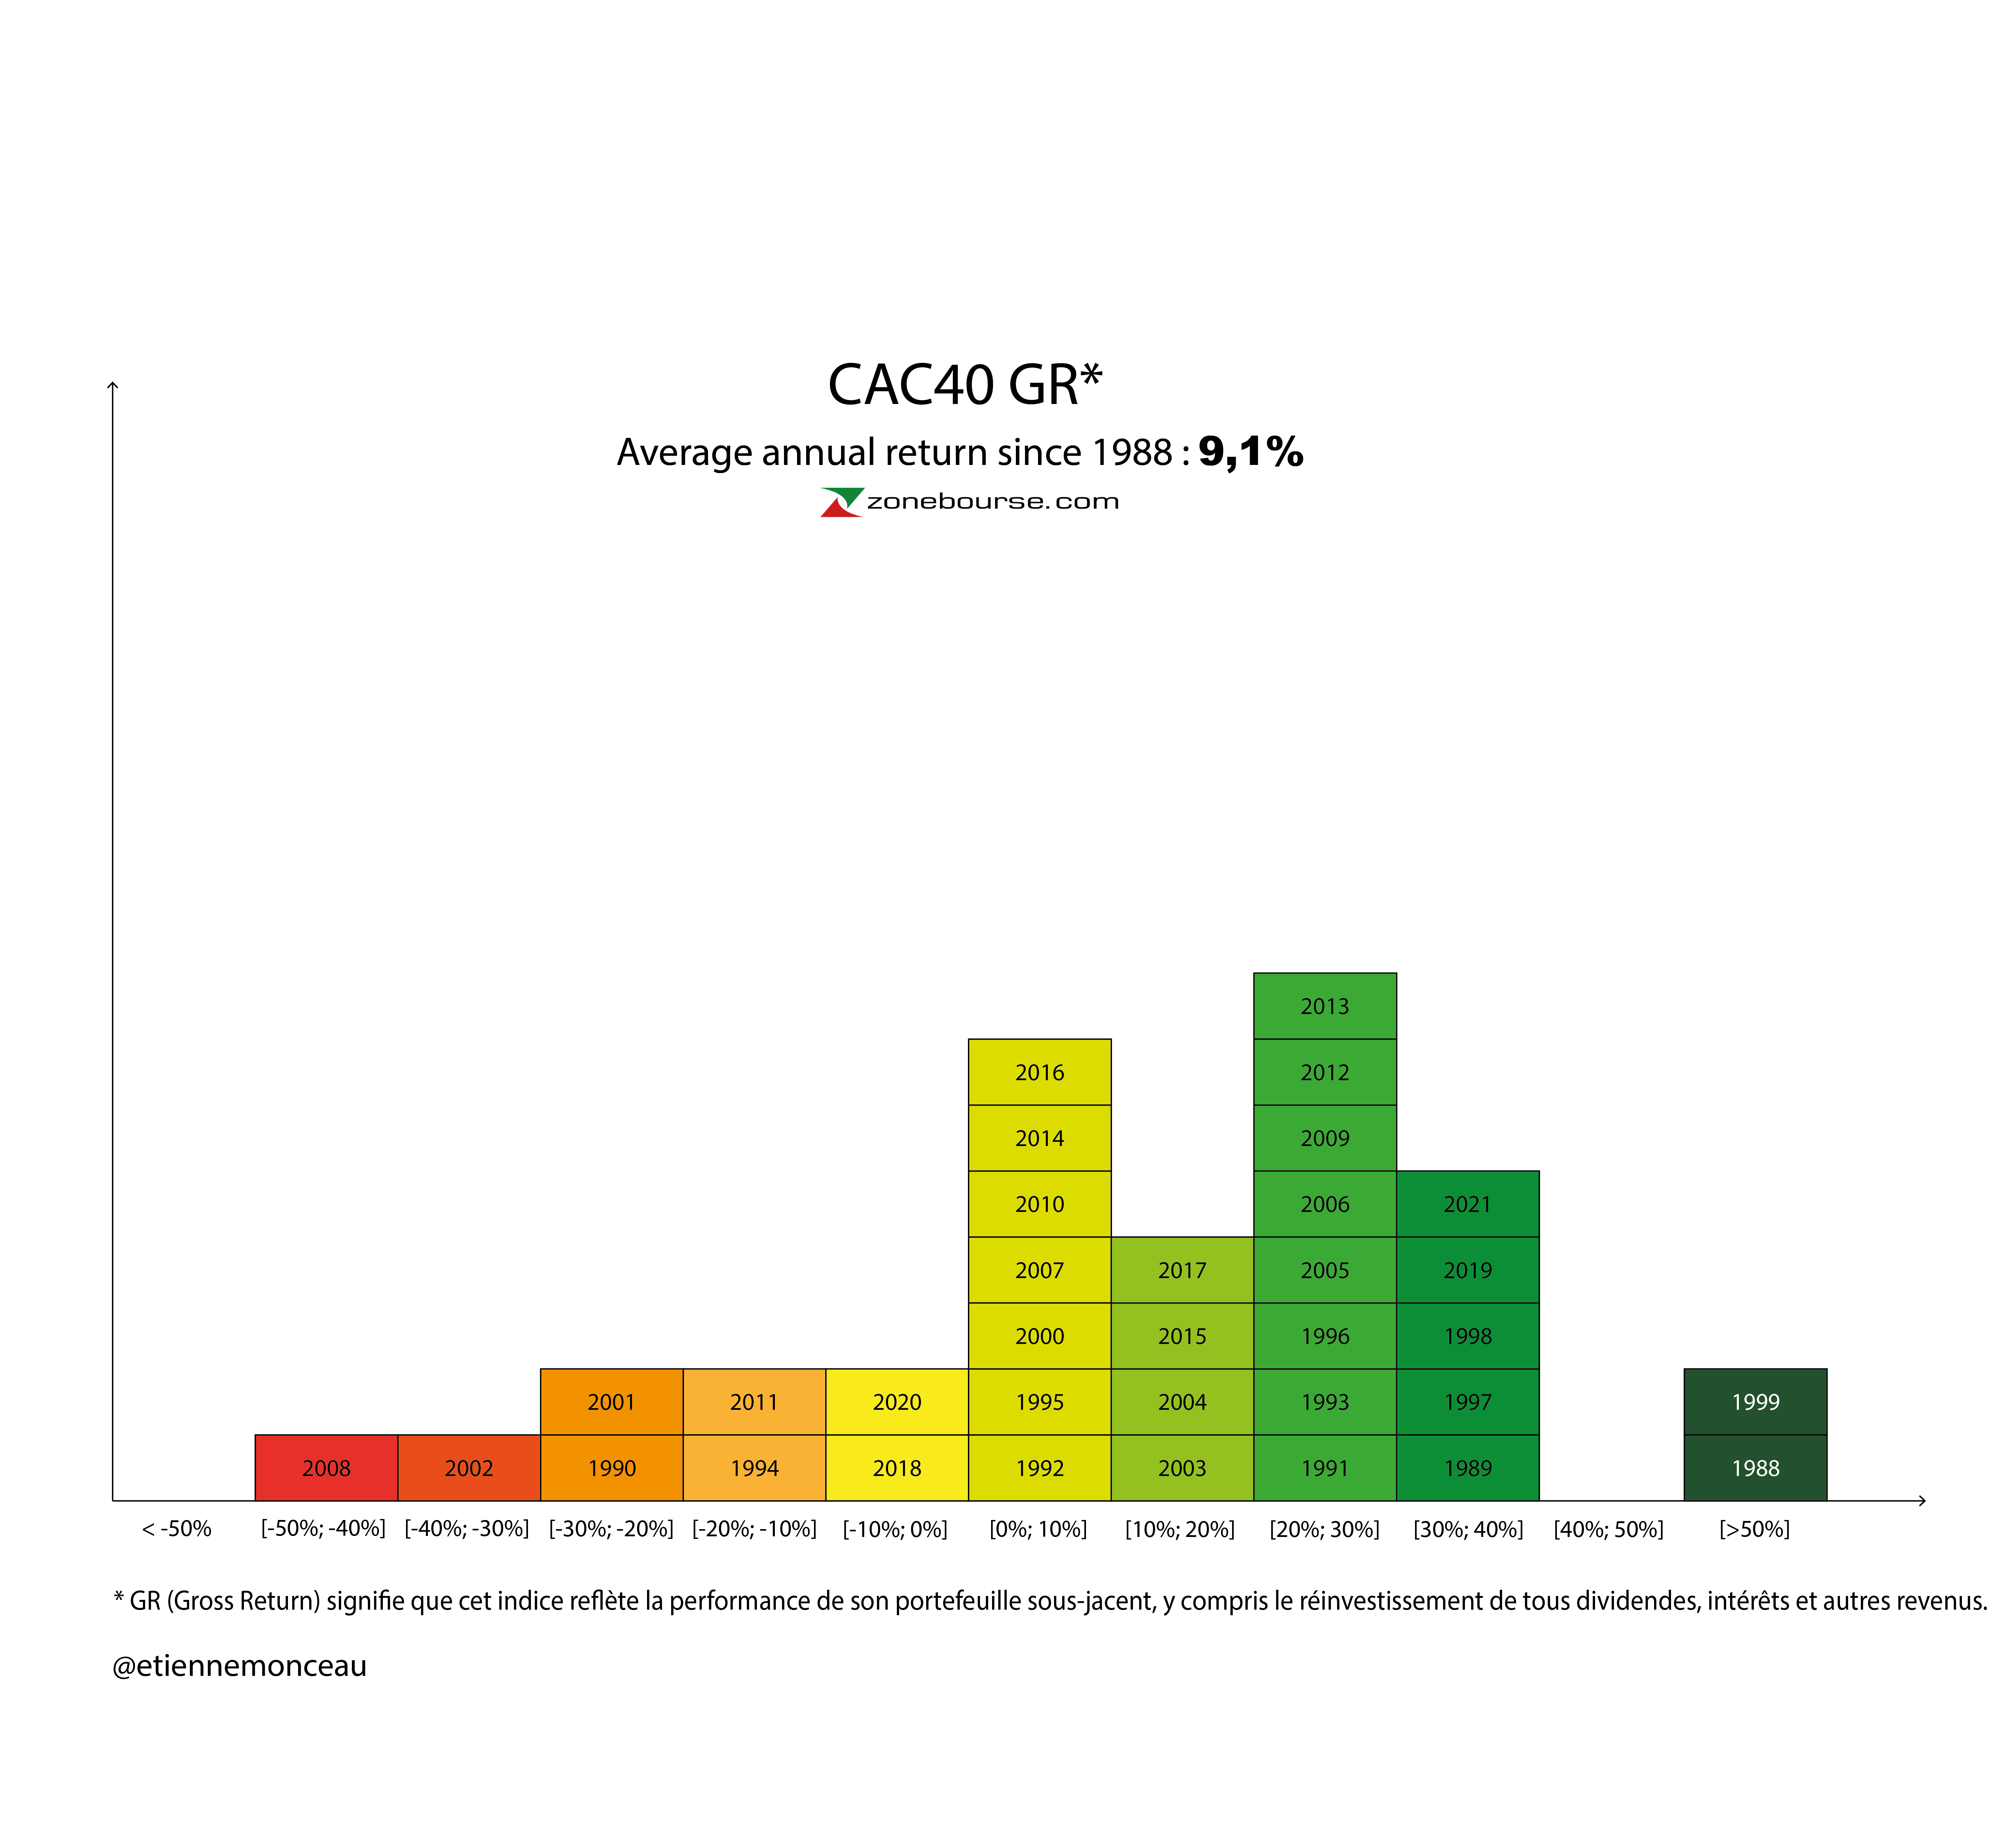 CAC40 GR performance graph